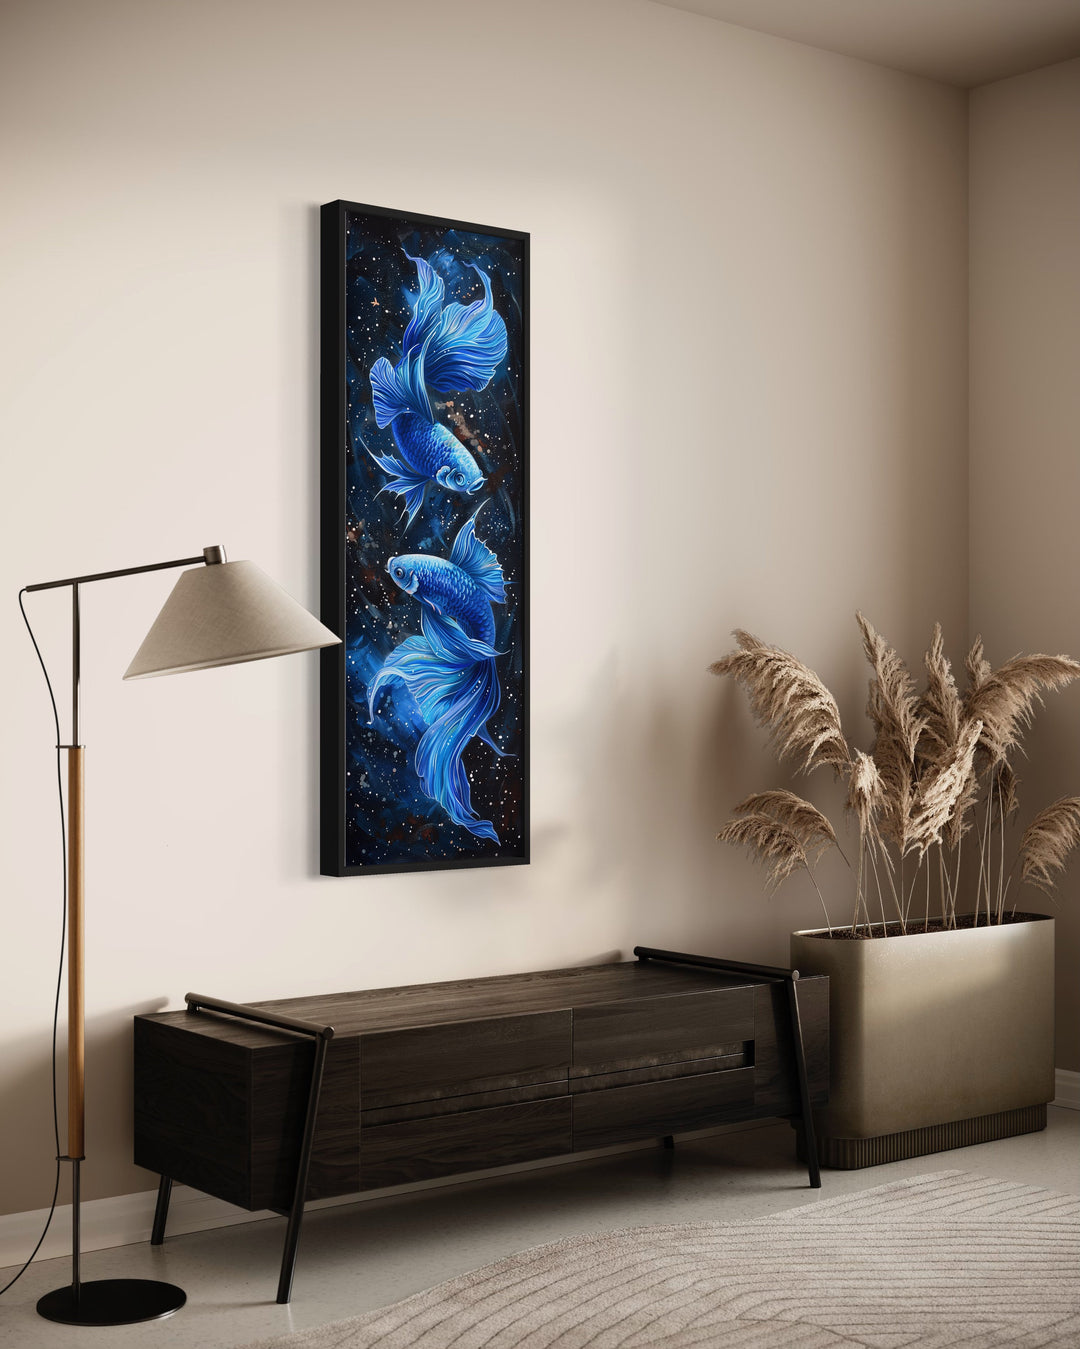 Tall Narrow Blue Betta Fish On Black Vertical Wall Art "Sapphire Swirl" over brown furniture